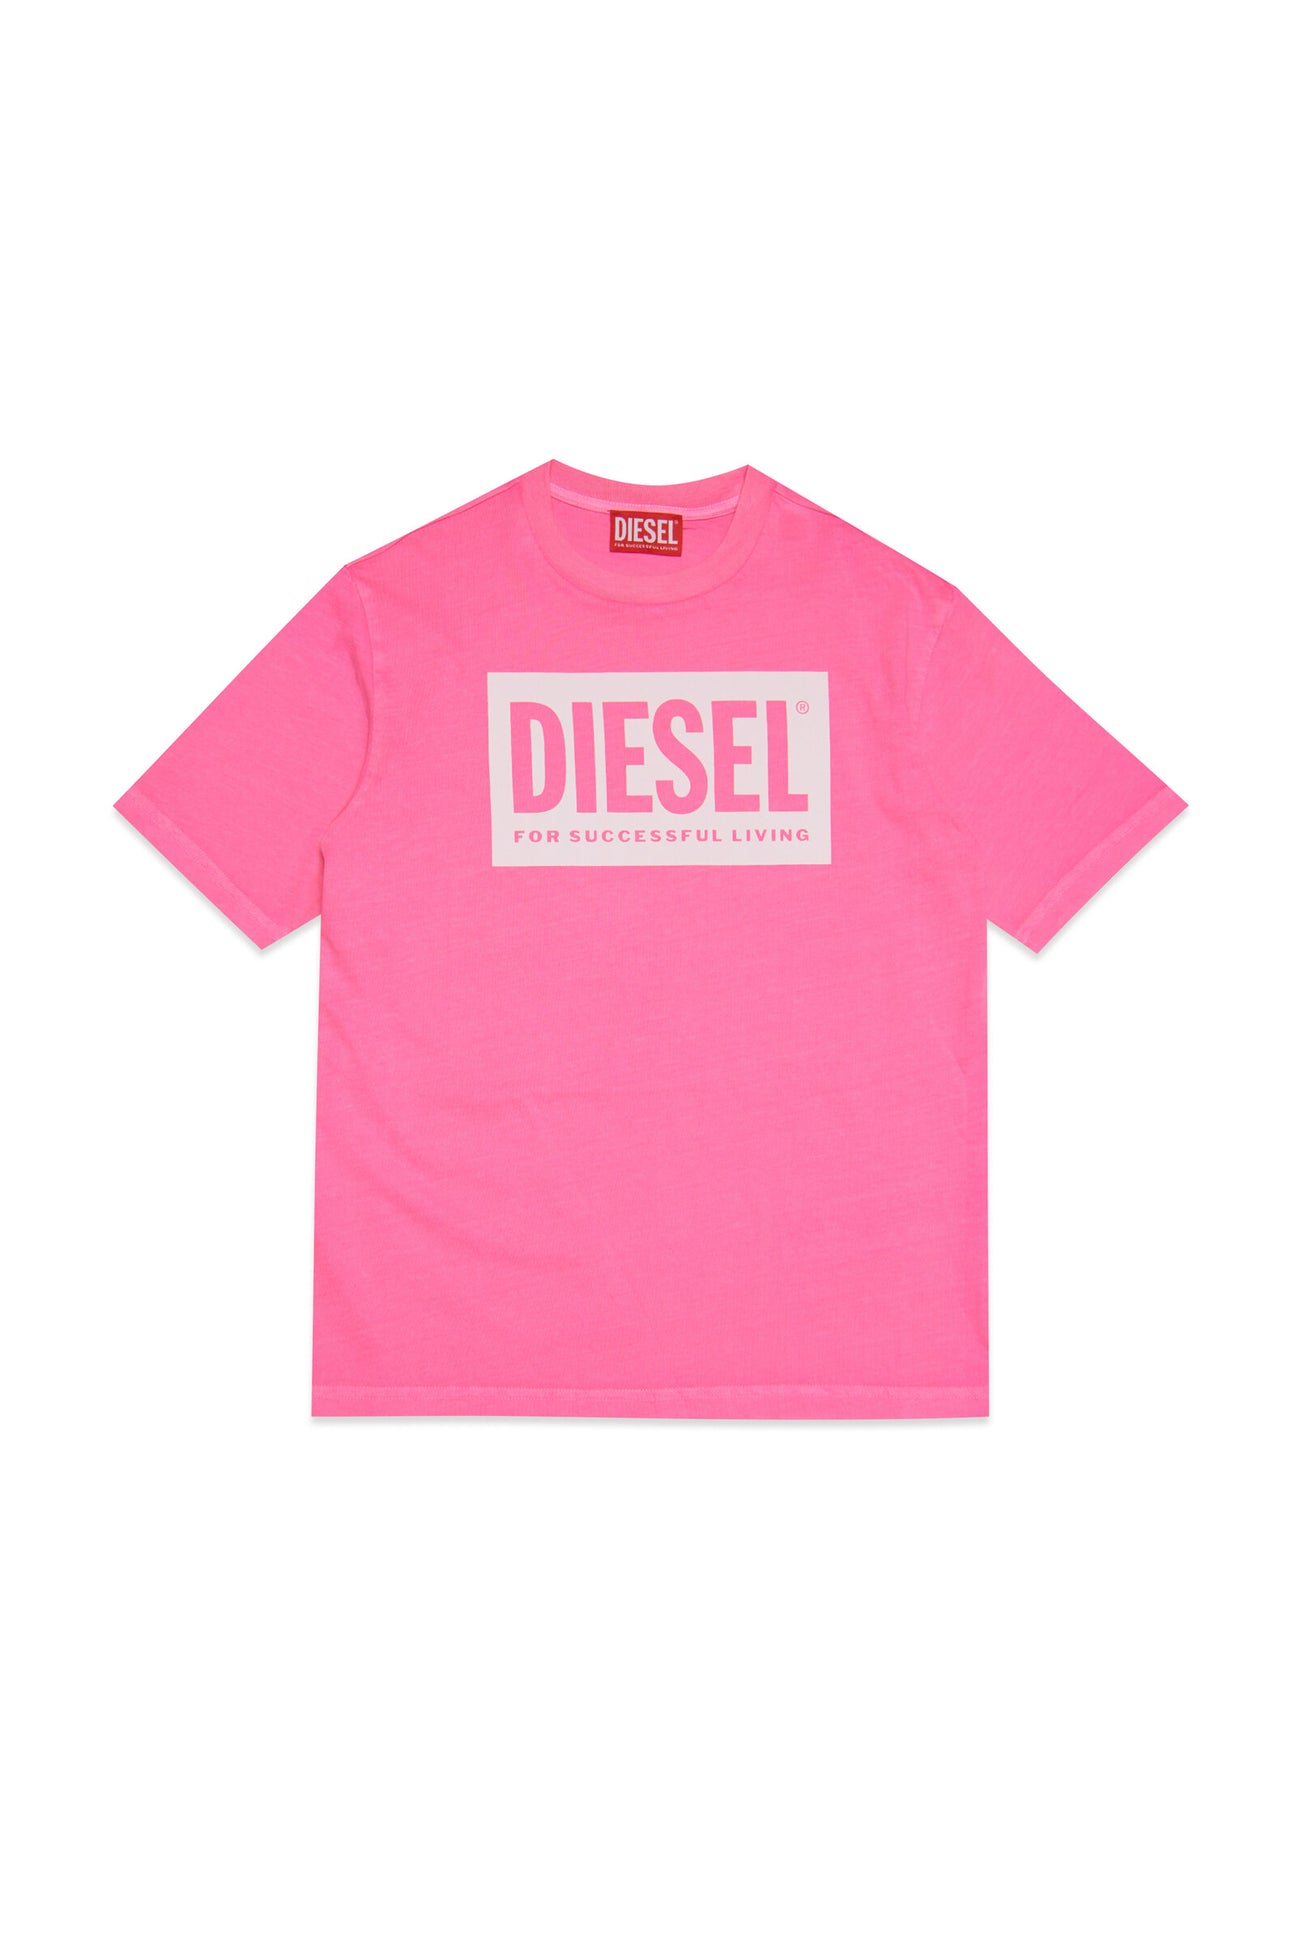 Fluorescent pink jersey T-shirt with logo Fluorescent pink jersey T-shirt with logo